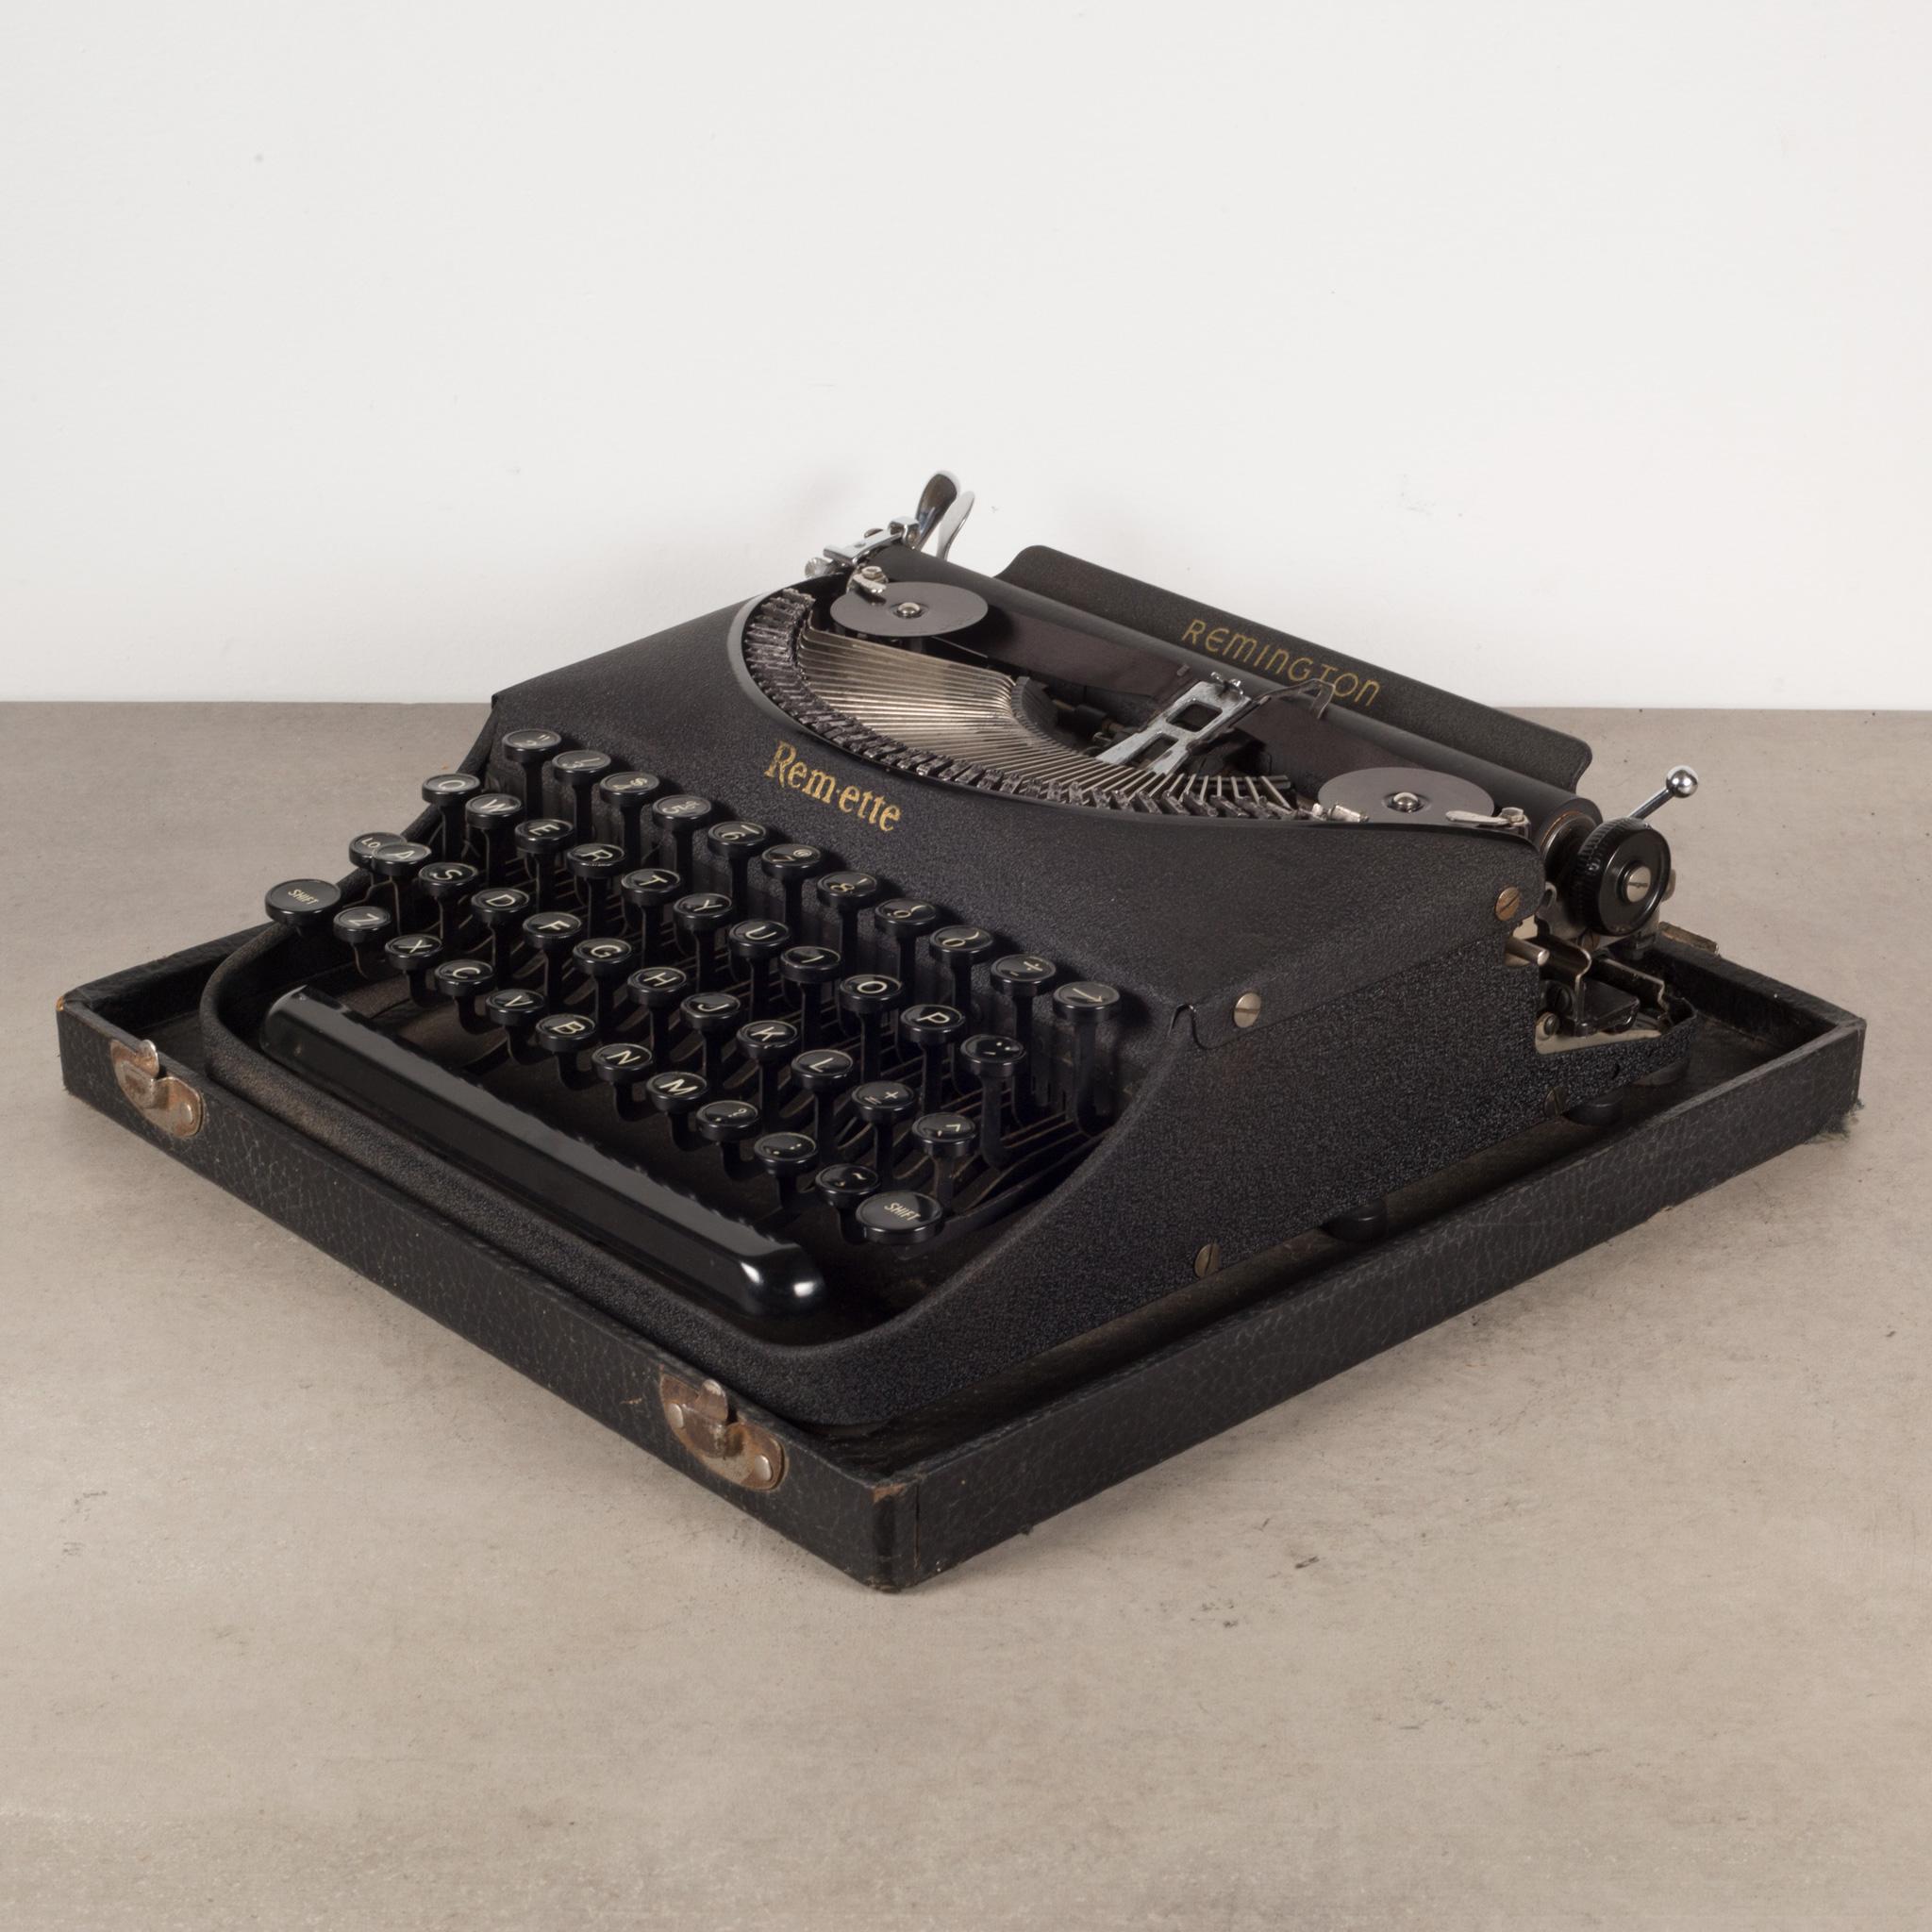 20th Century Antique Refurbished Remington Remette Typewriter c.1939